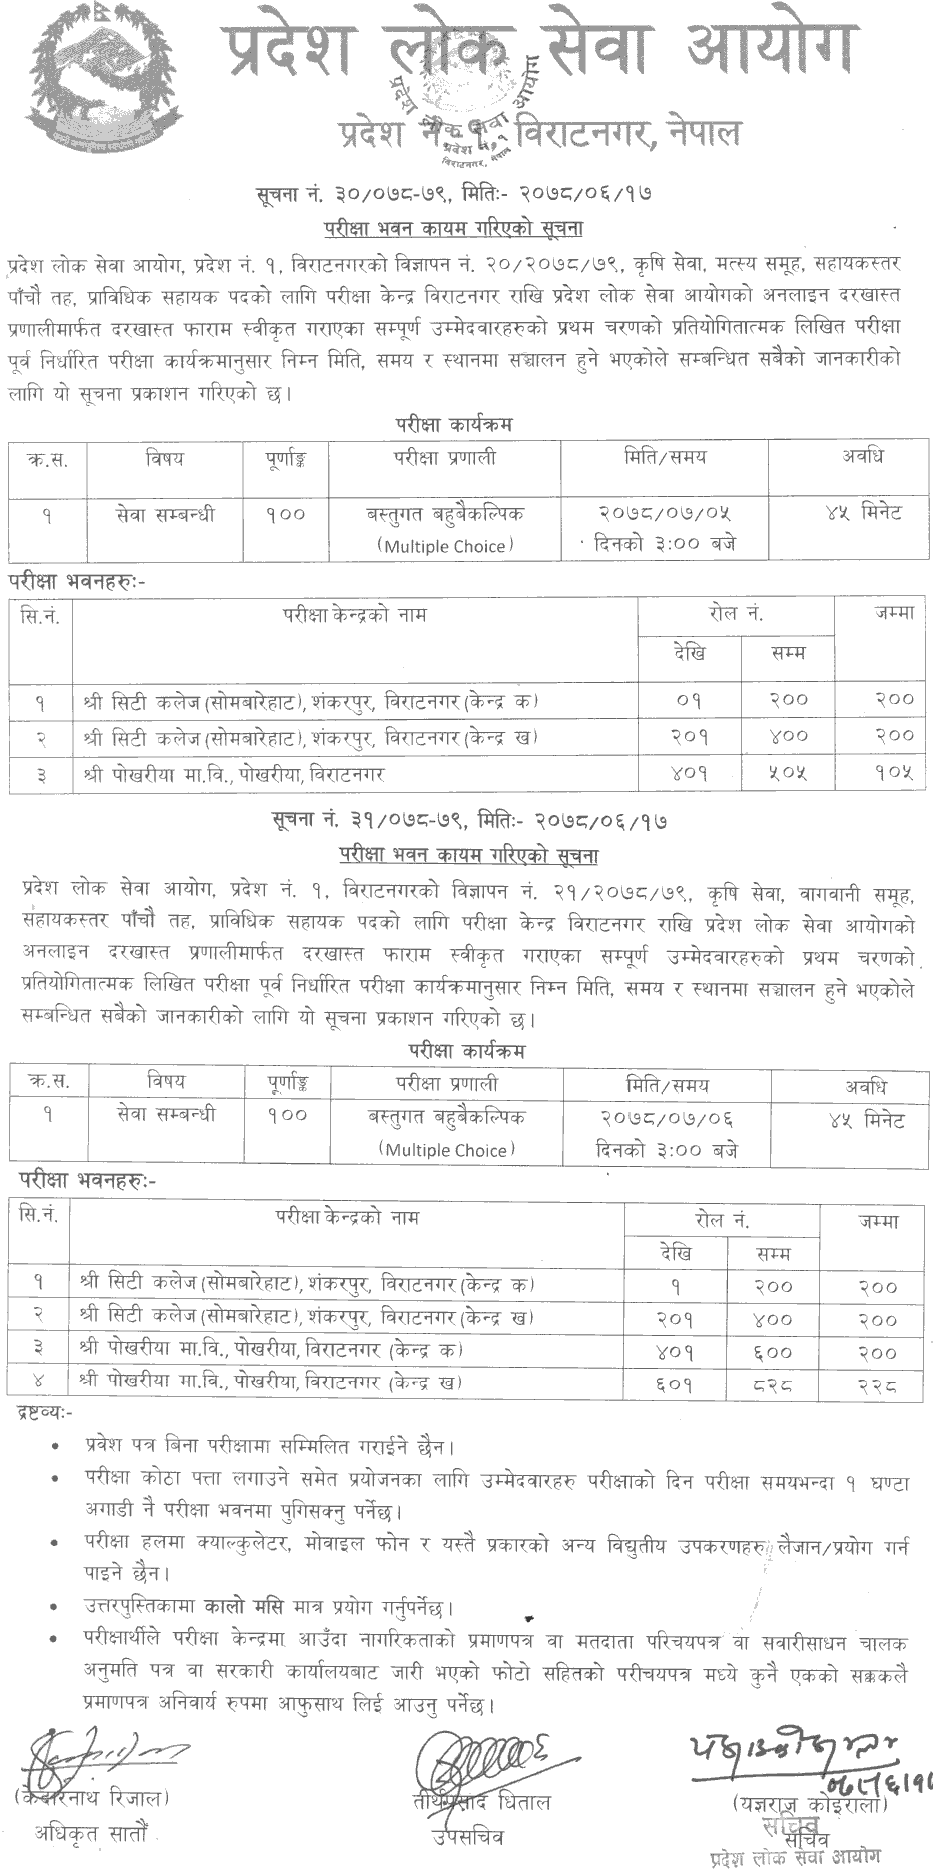 Pradesh 1 Lok Sewa Aayog Written Exam Center of Agriculture Technical Assistant